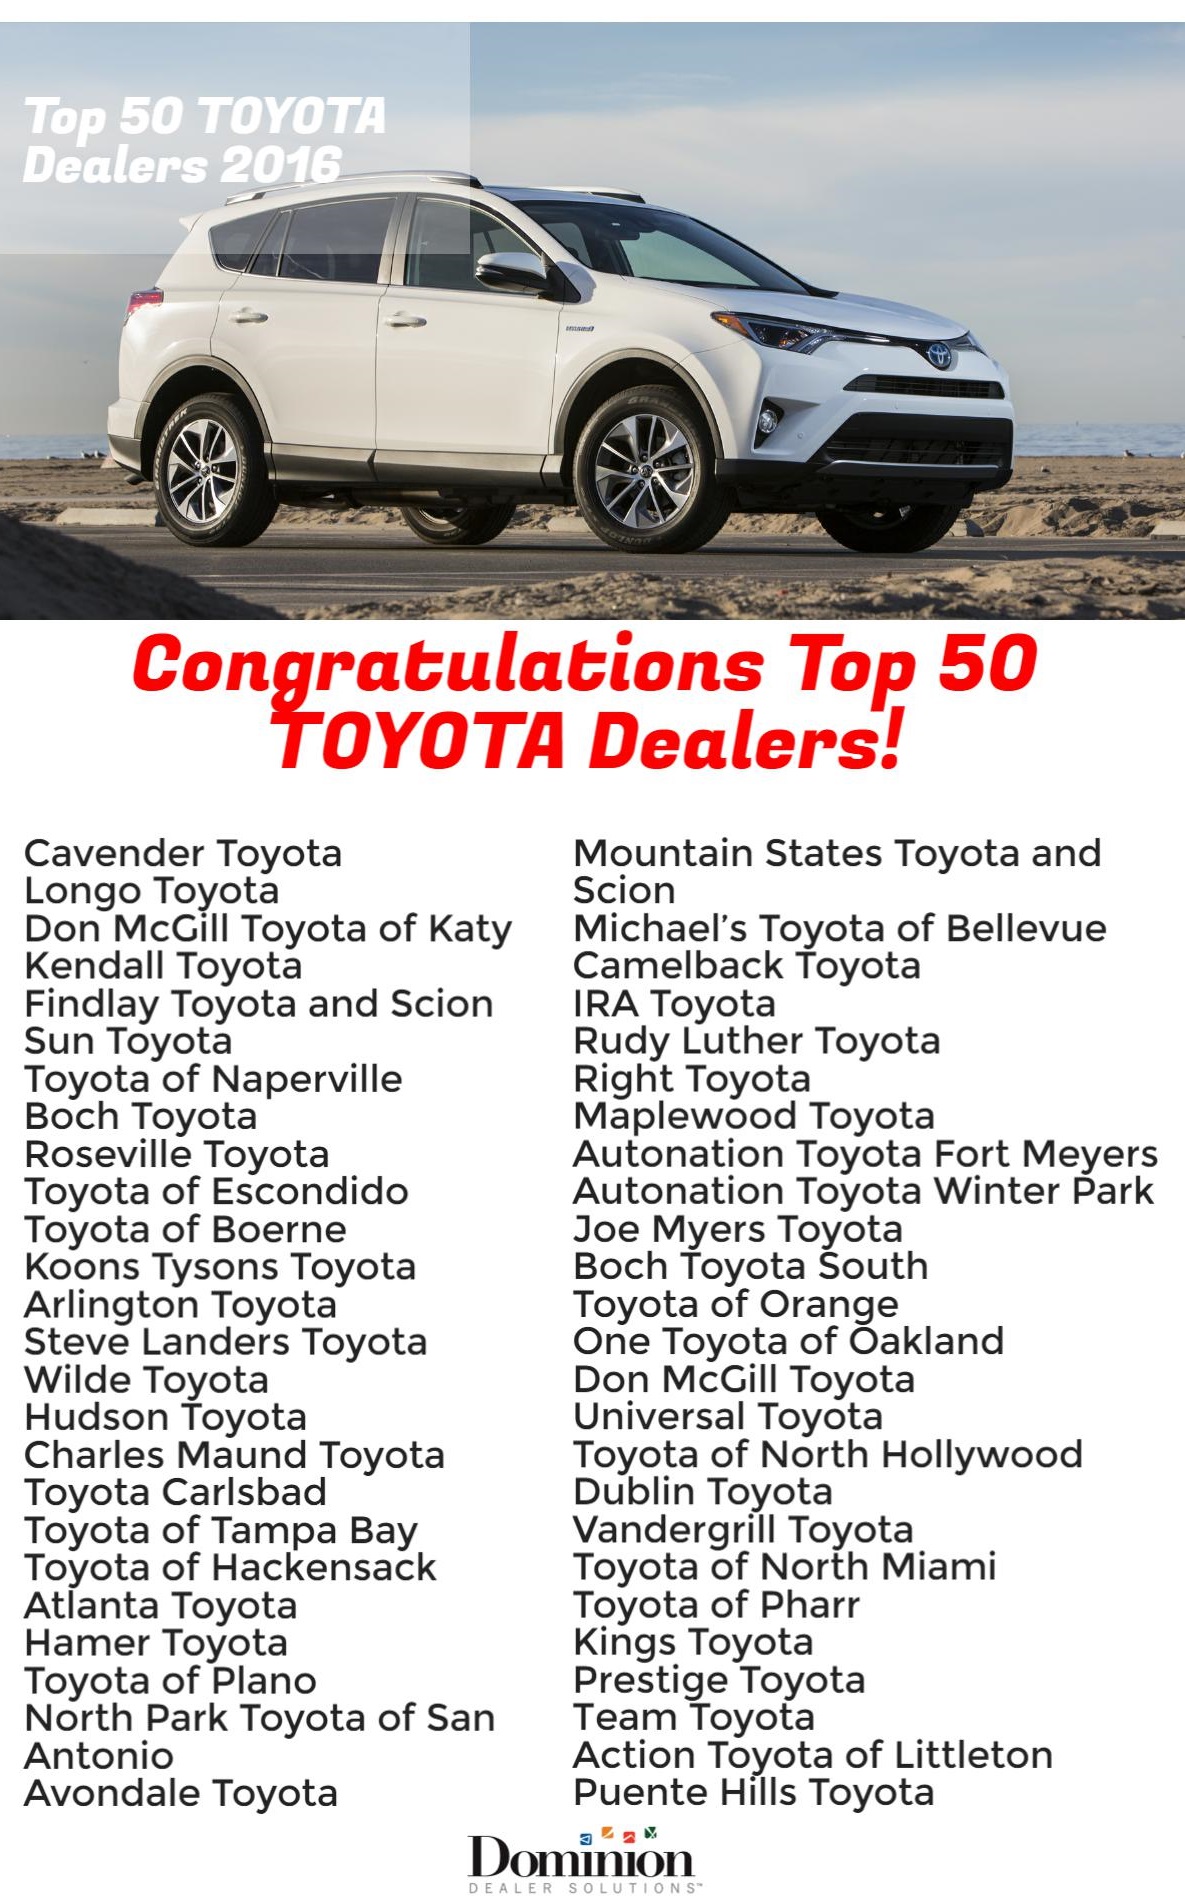 2016 Top 50 Toyota dealers 